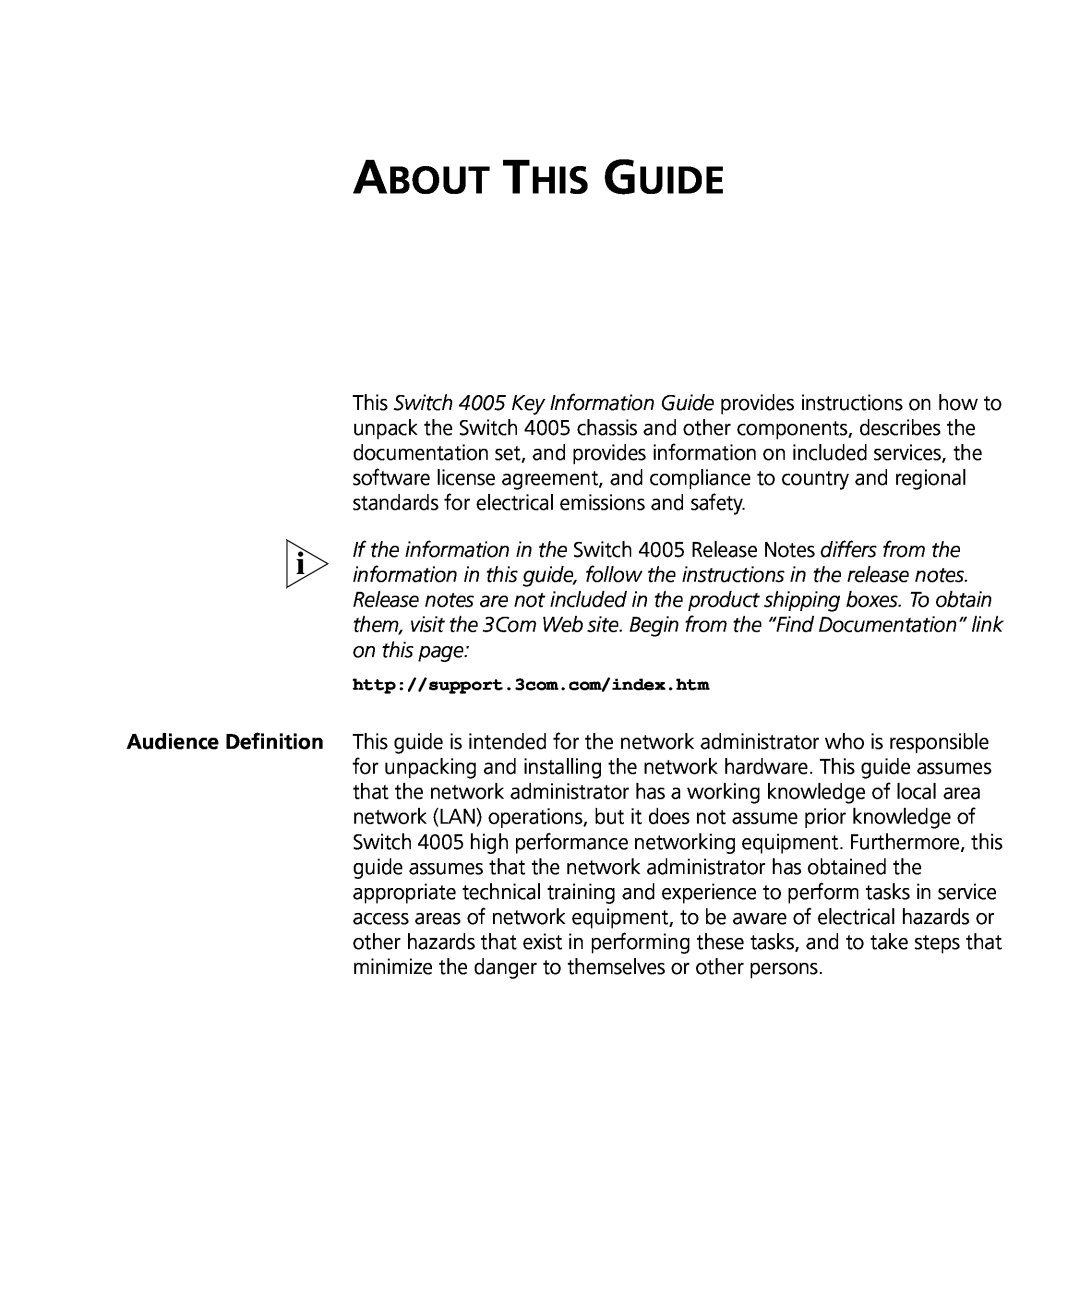 3Com 4005 manual About This Guide, http//support.3com.com/index.htm 